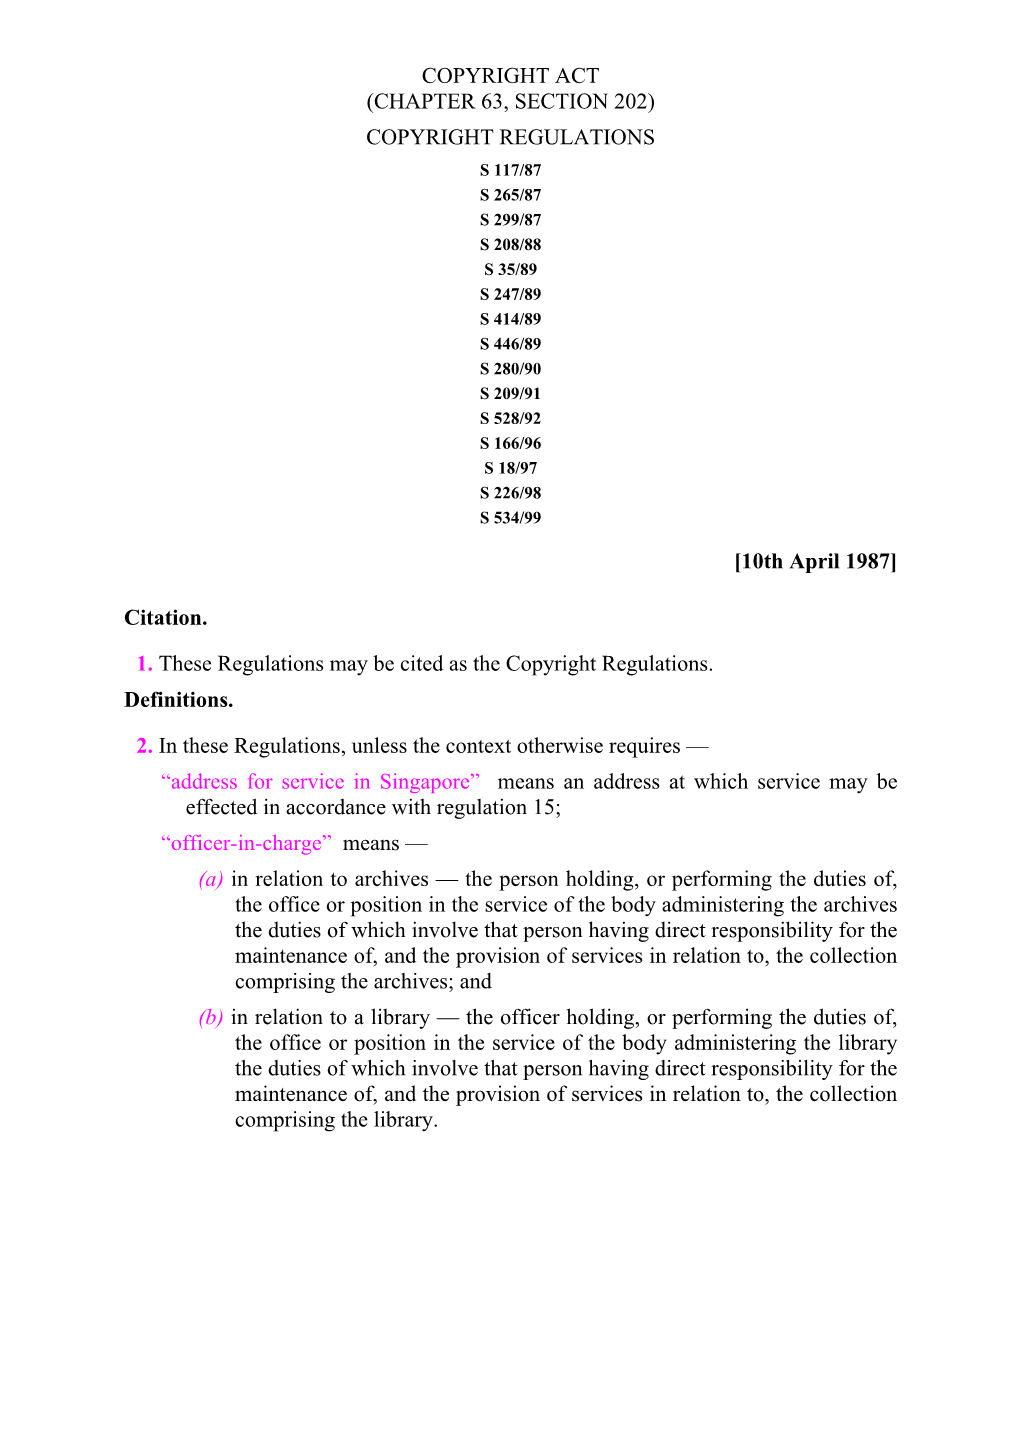 Copyright Regulations No. 117 of April 8, 1987